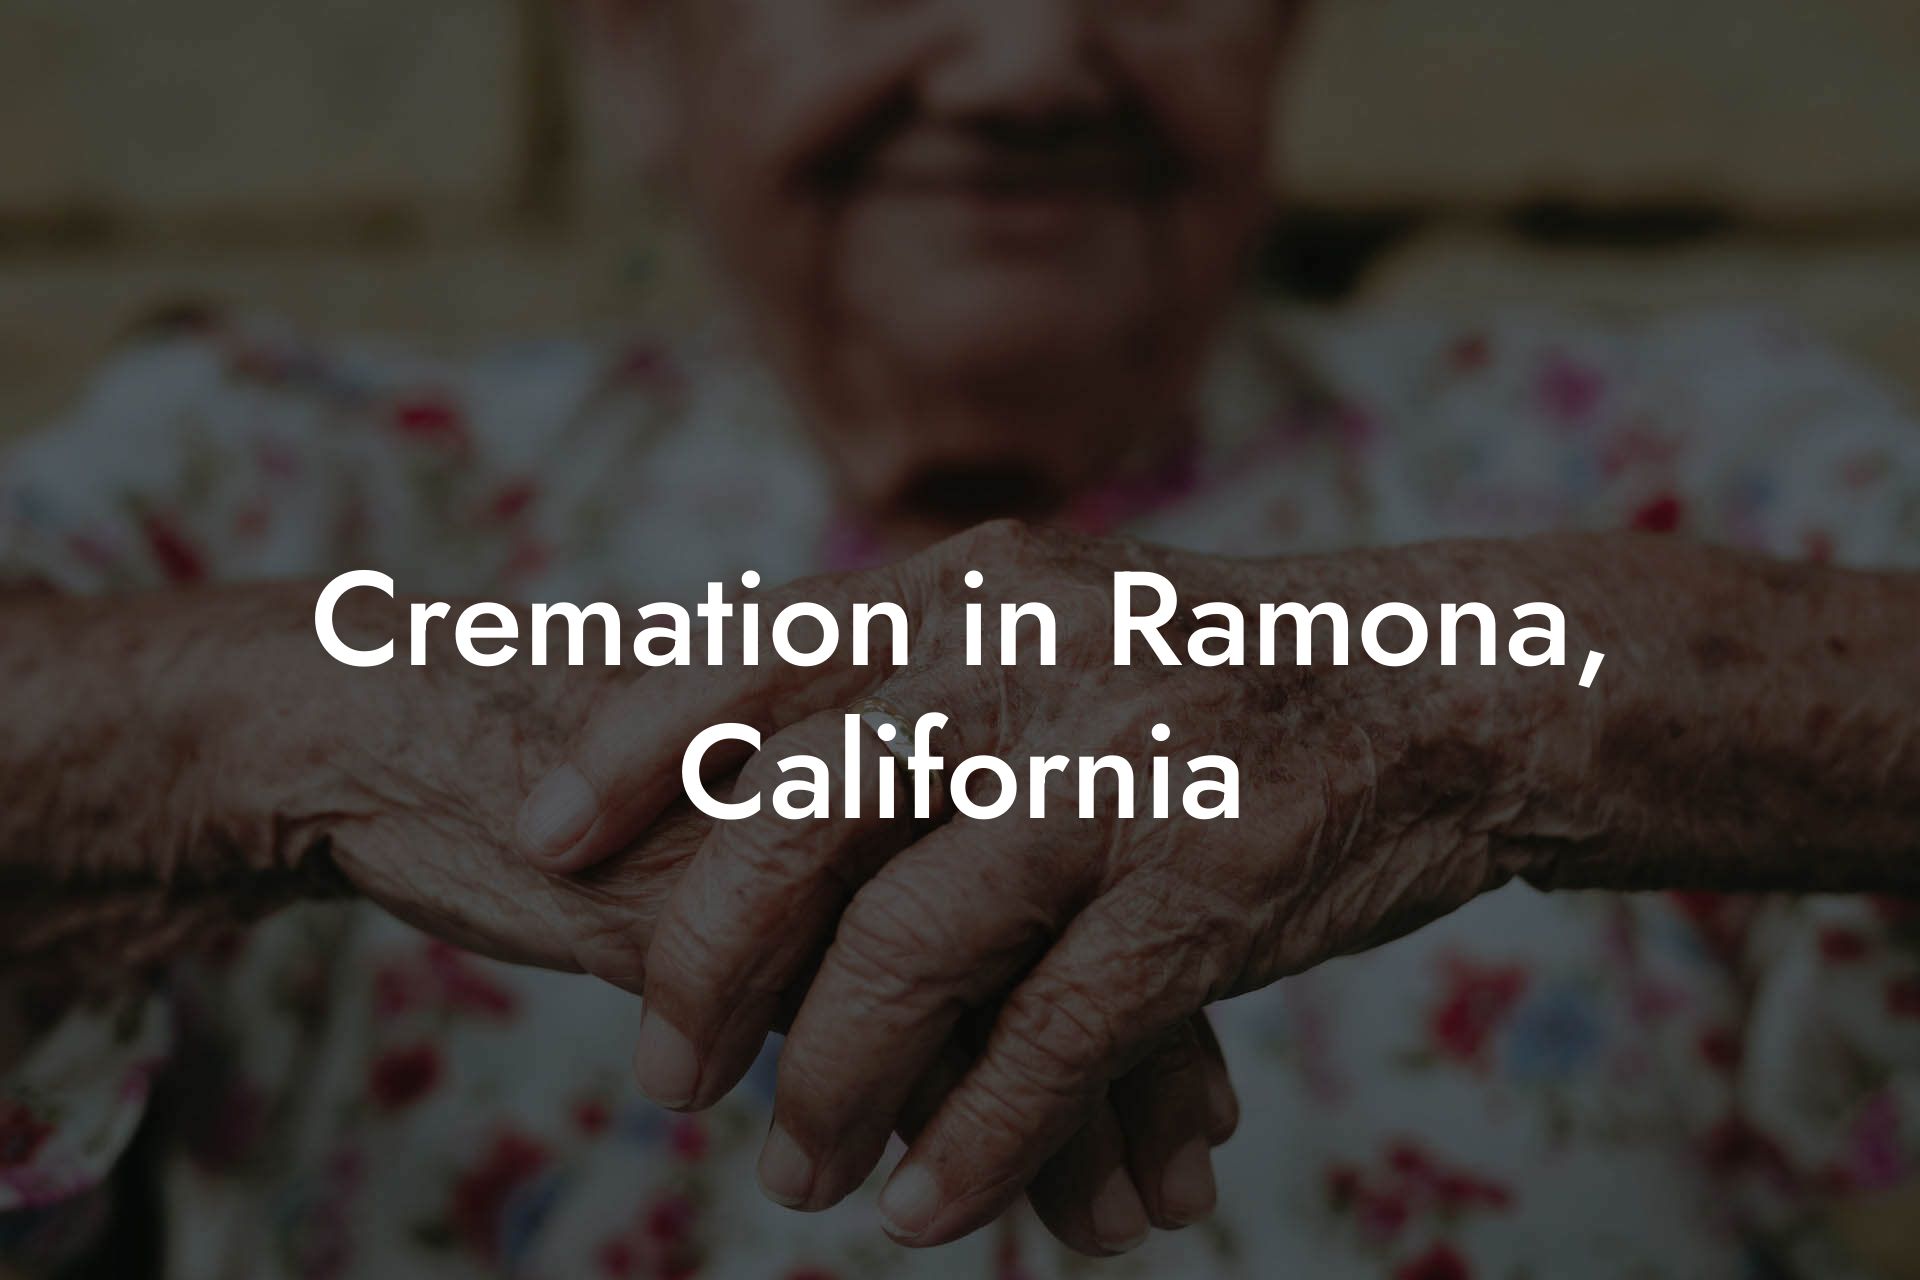 Cremation in Ramona, California